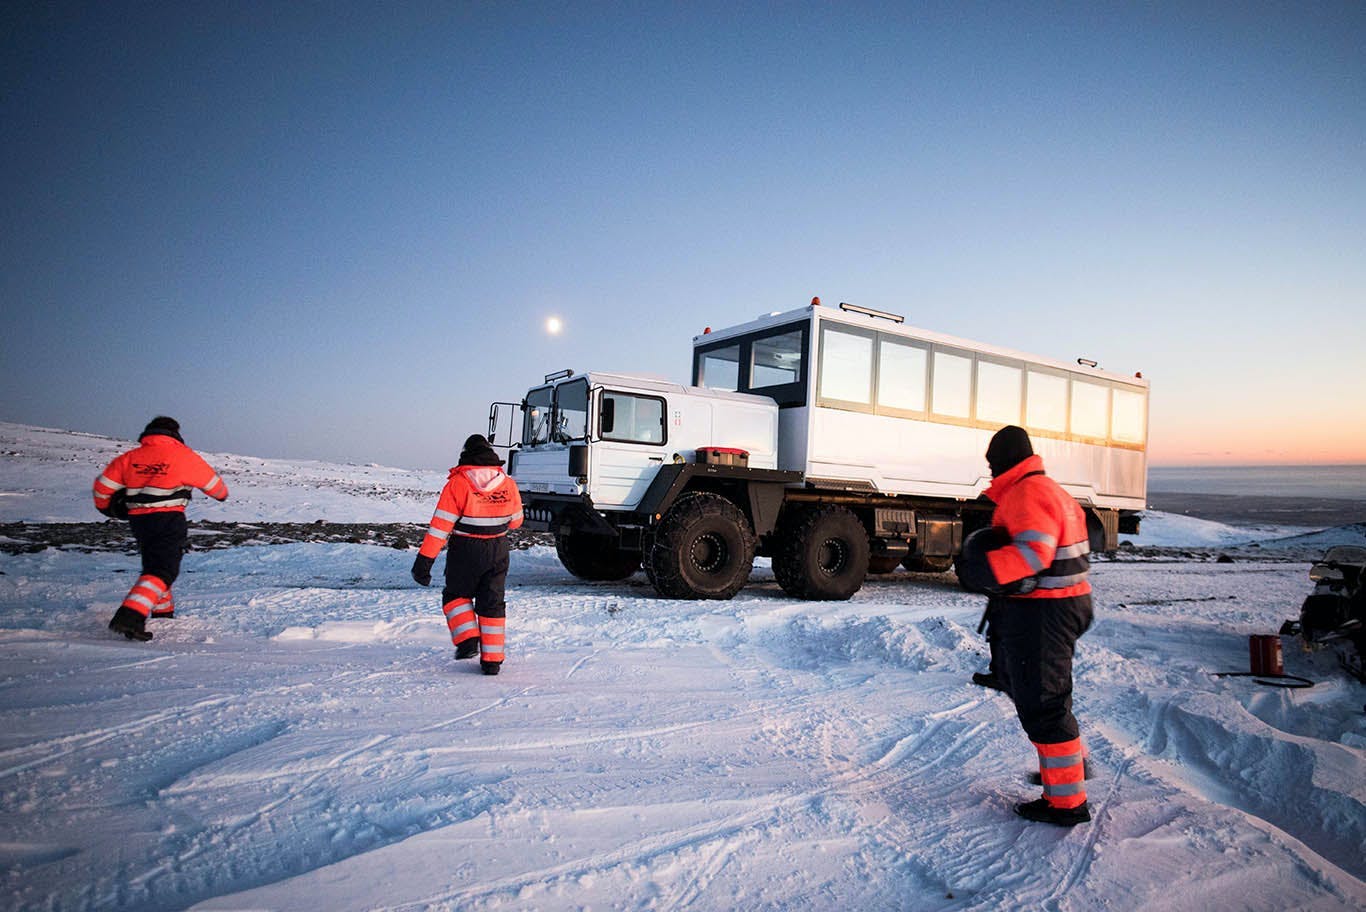 On monster trucks exploring Icelandic glacier